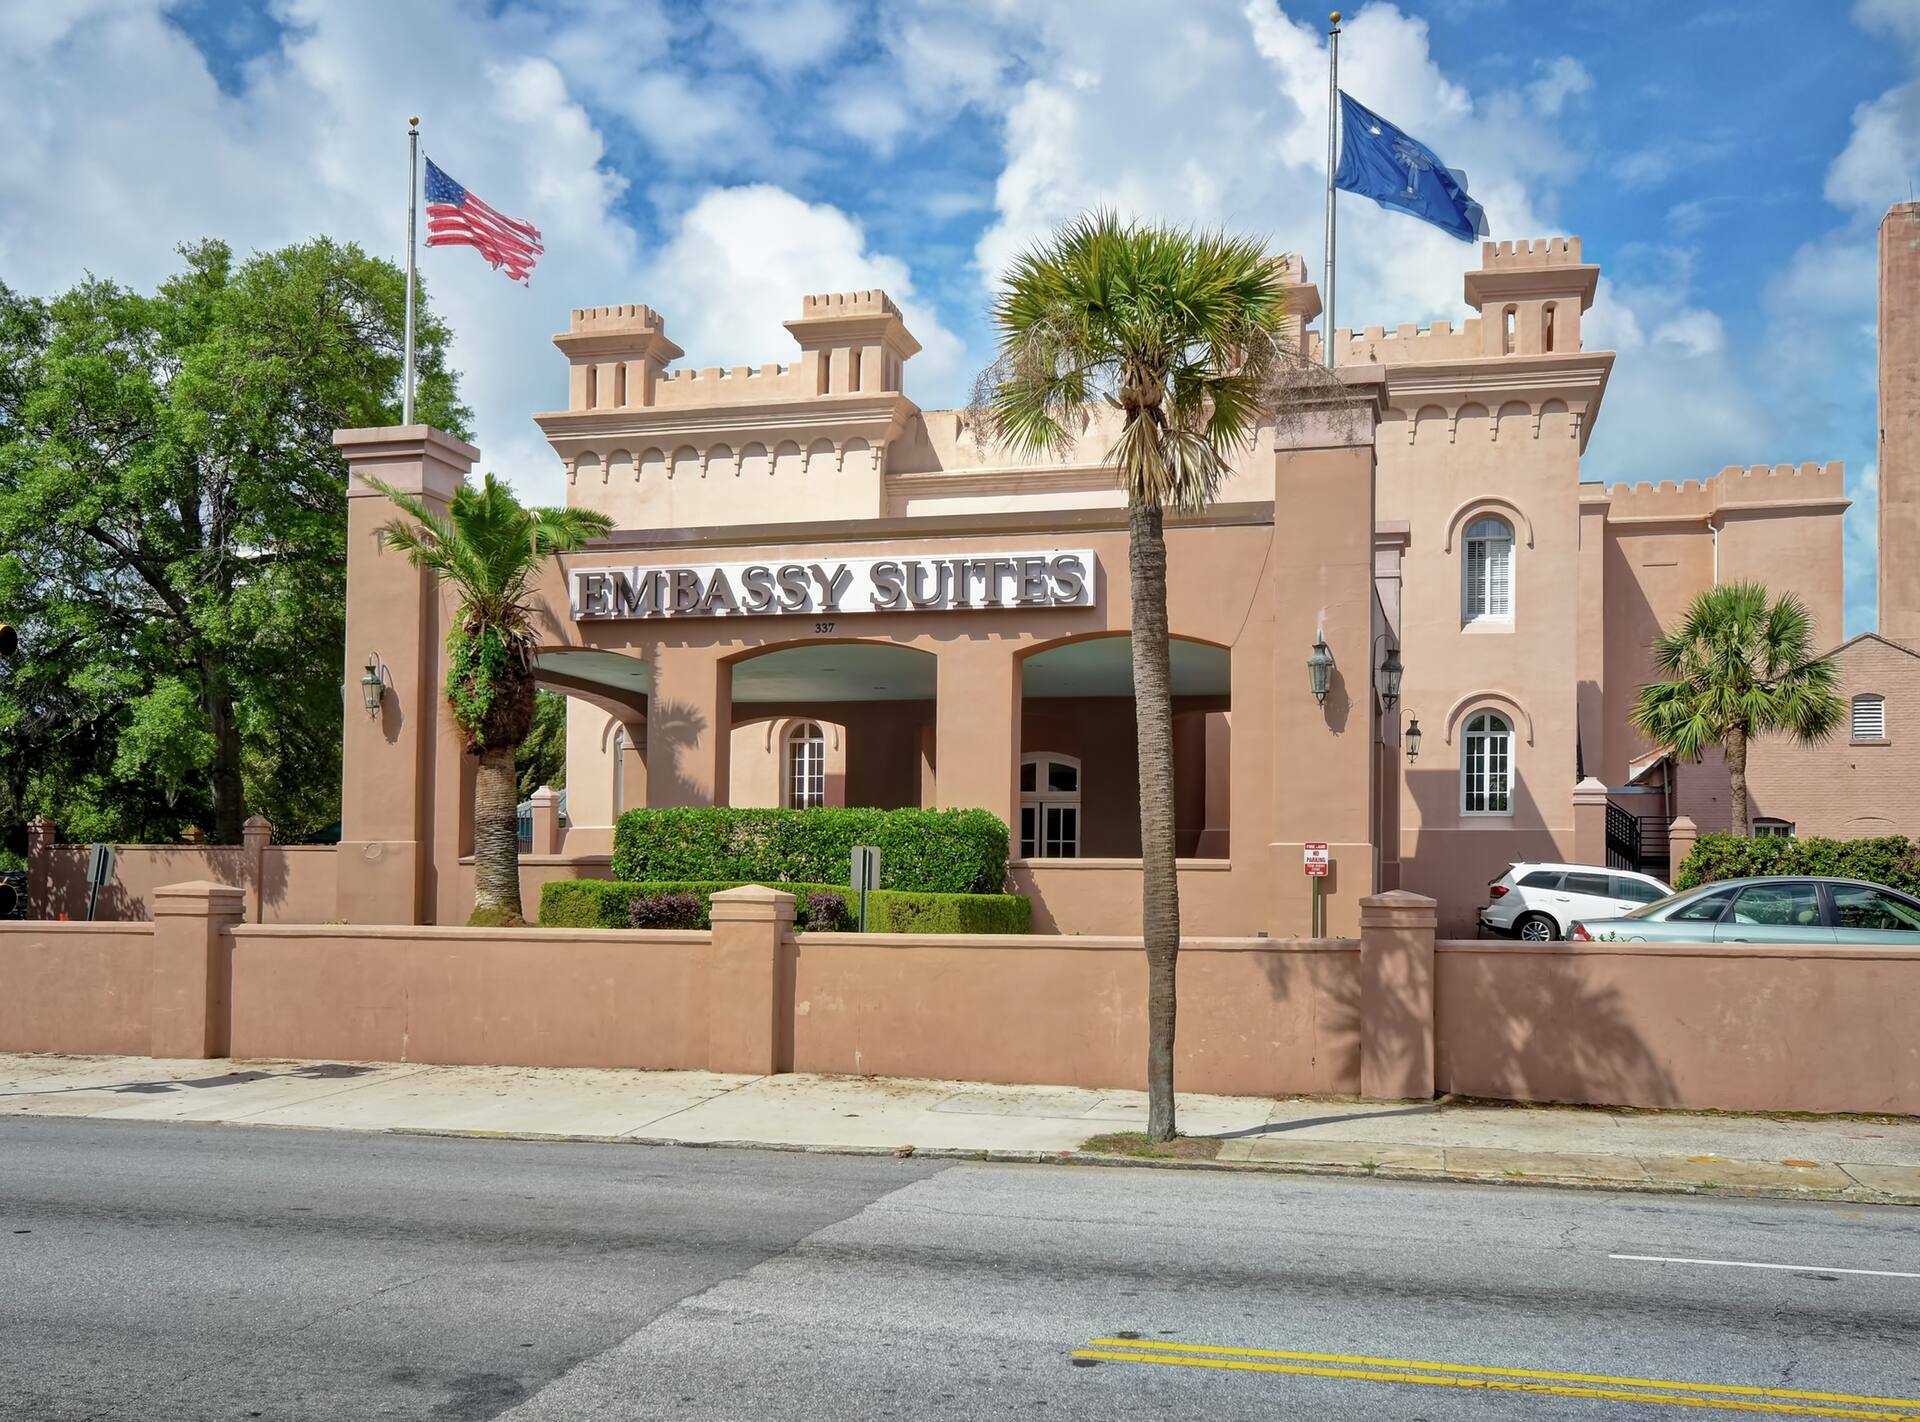 Photo of Embassy Suites by Hilton Charleston Historic District, Charleston, SC